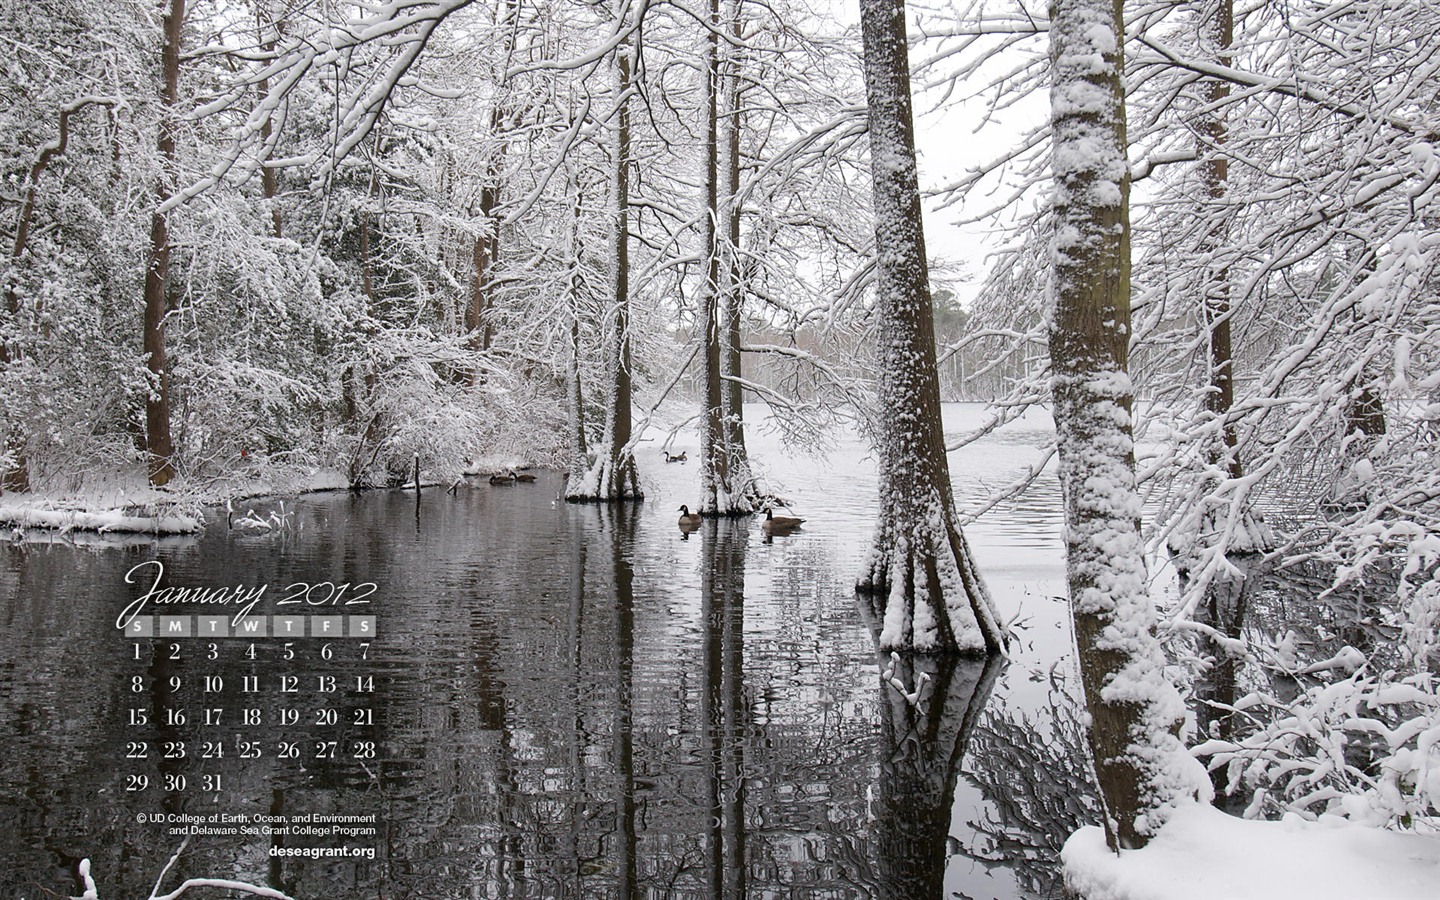 January 2012 Calendar Wallpapers #2 - 1440x900